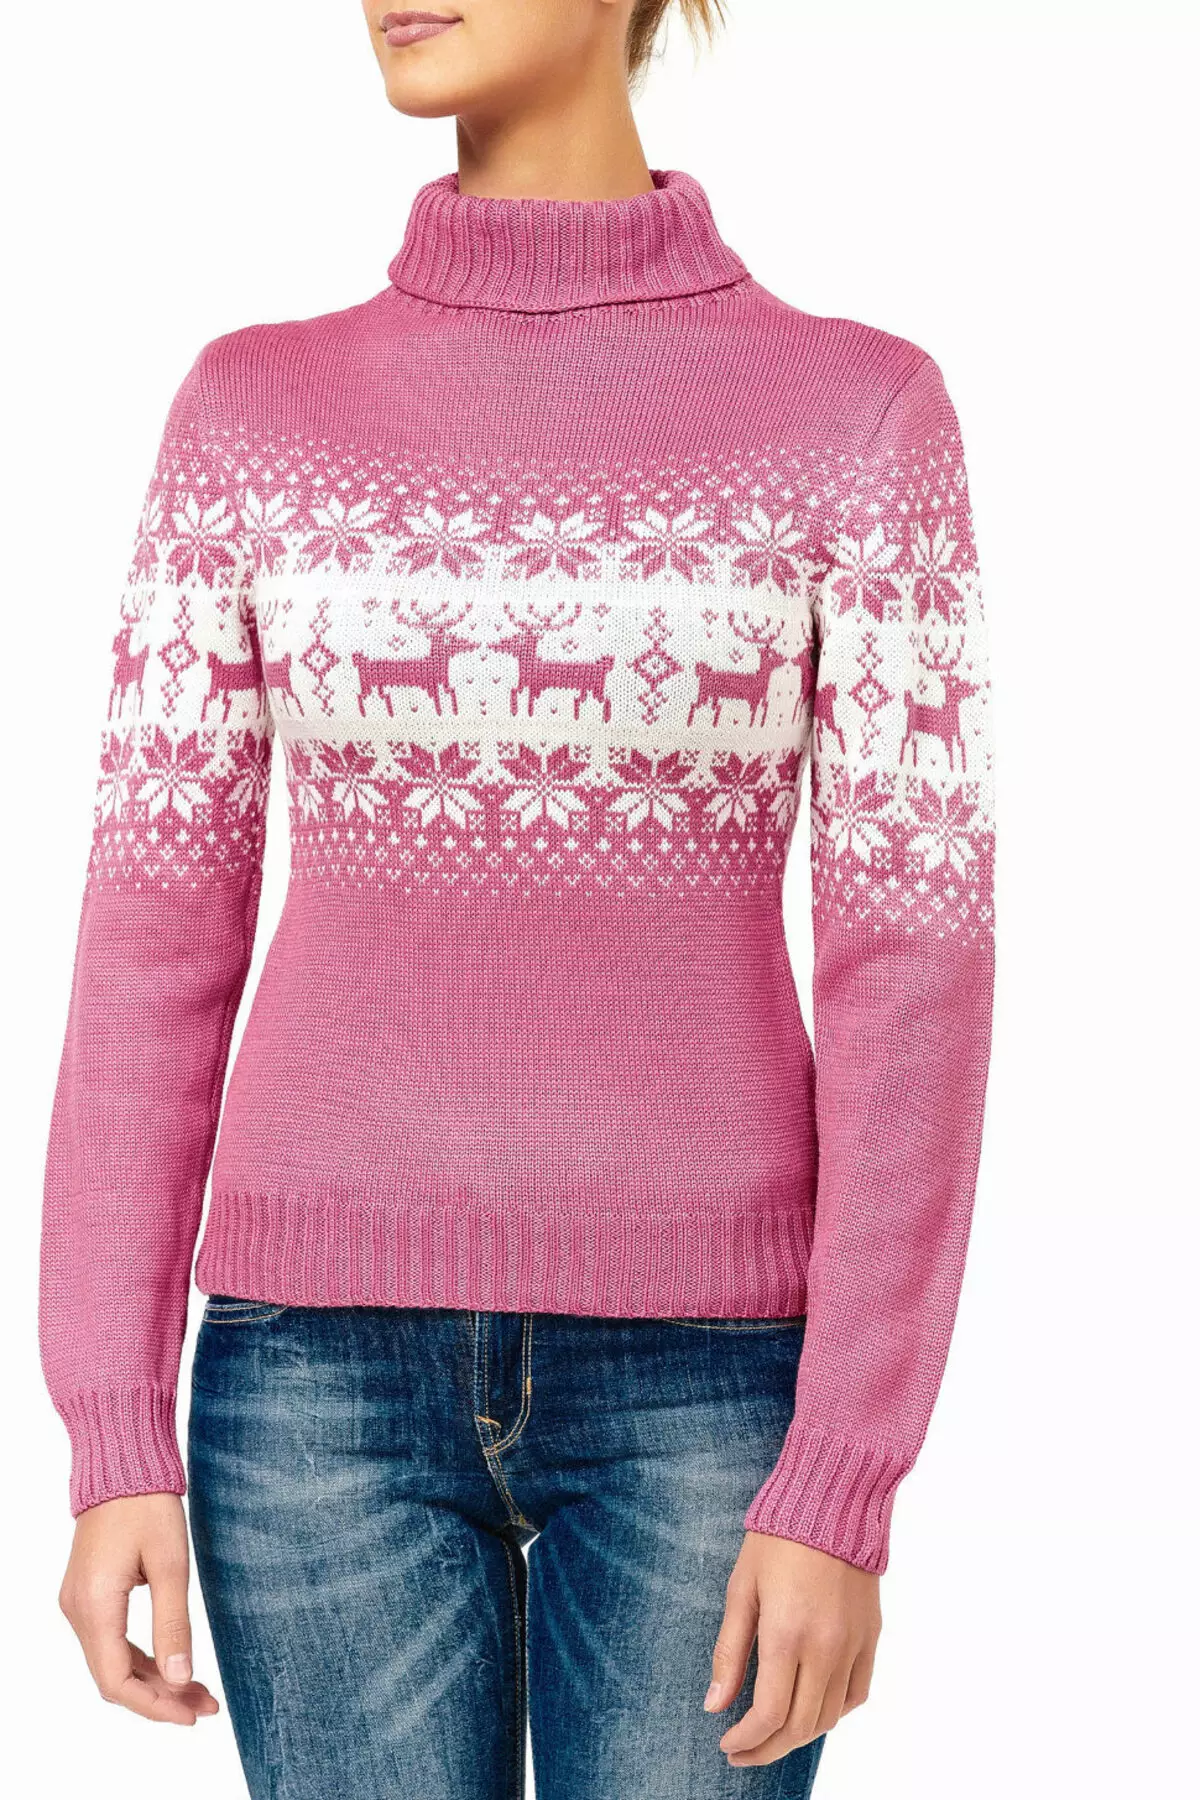 Suéter rosa (62 fotos): Qué usar, suéter, suavemente rosa, esponjoso, rosa pálido, rosa gris, rosa brillante 1039_15